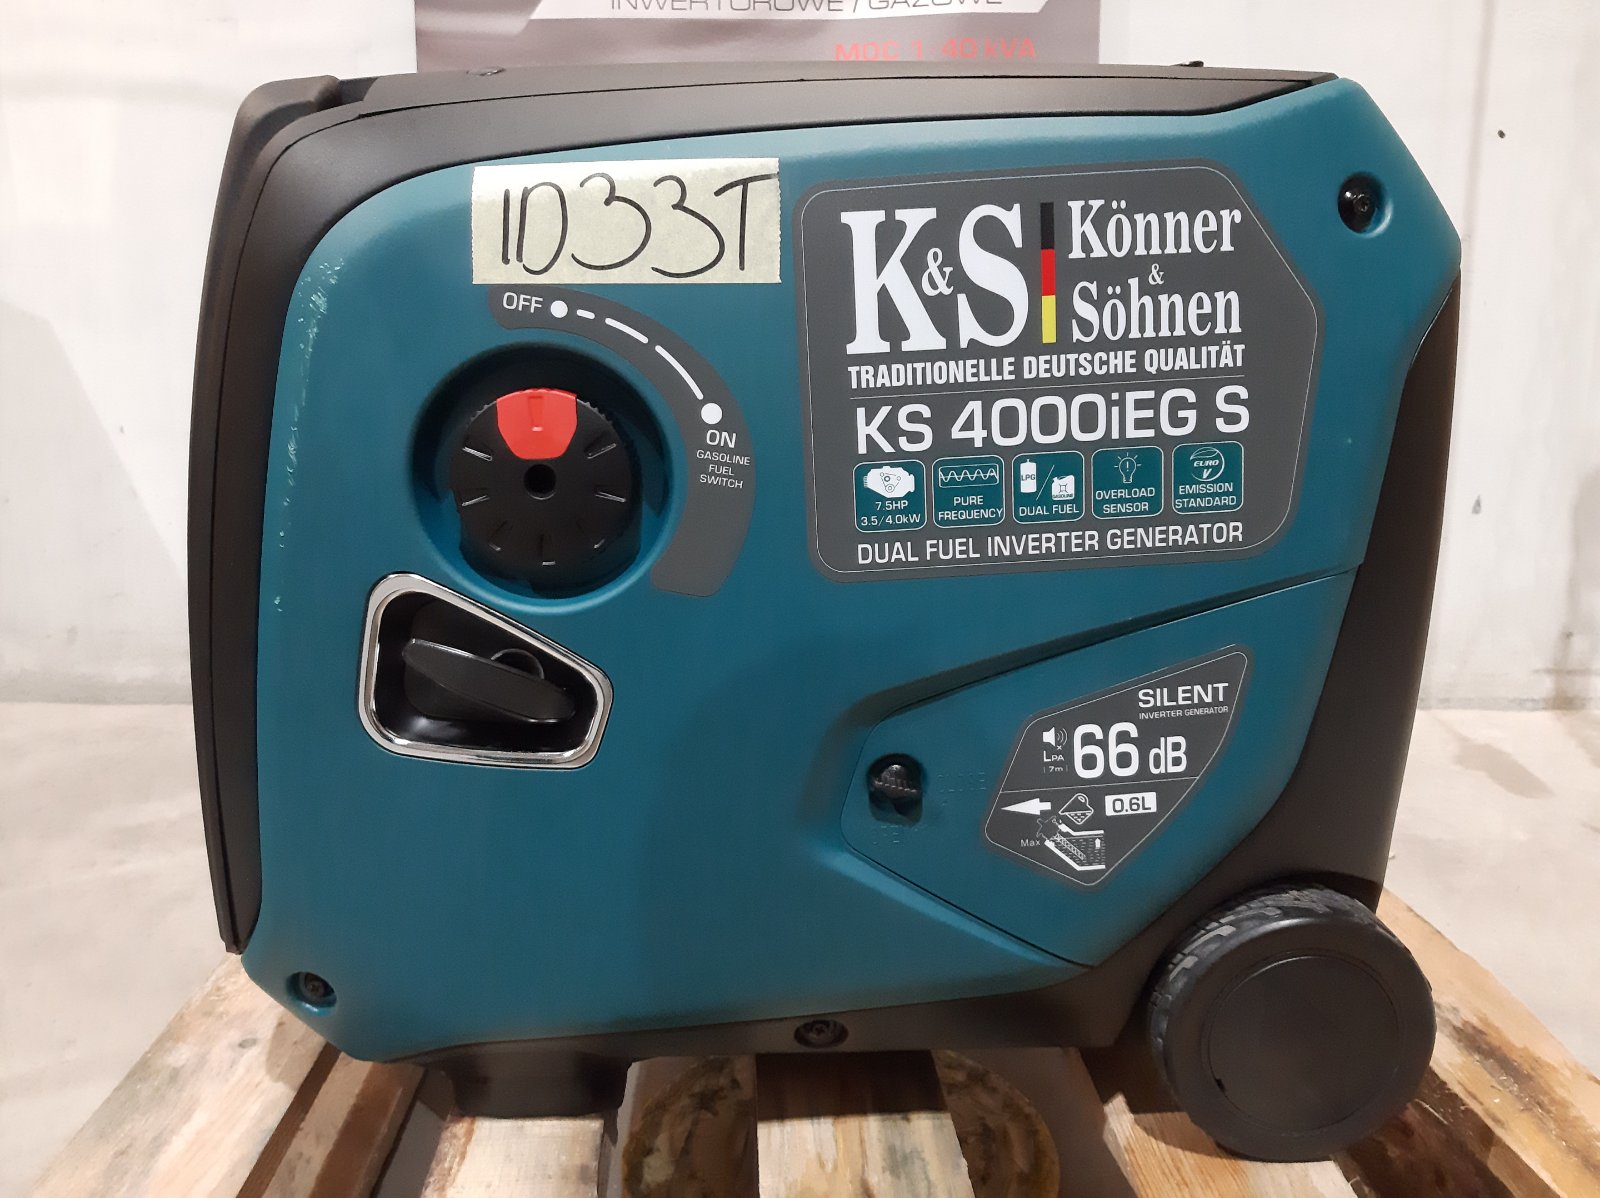 LPG/gasoline inverter generator KS 4000iEG S (ID 33T)